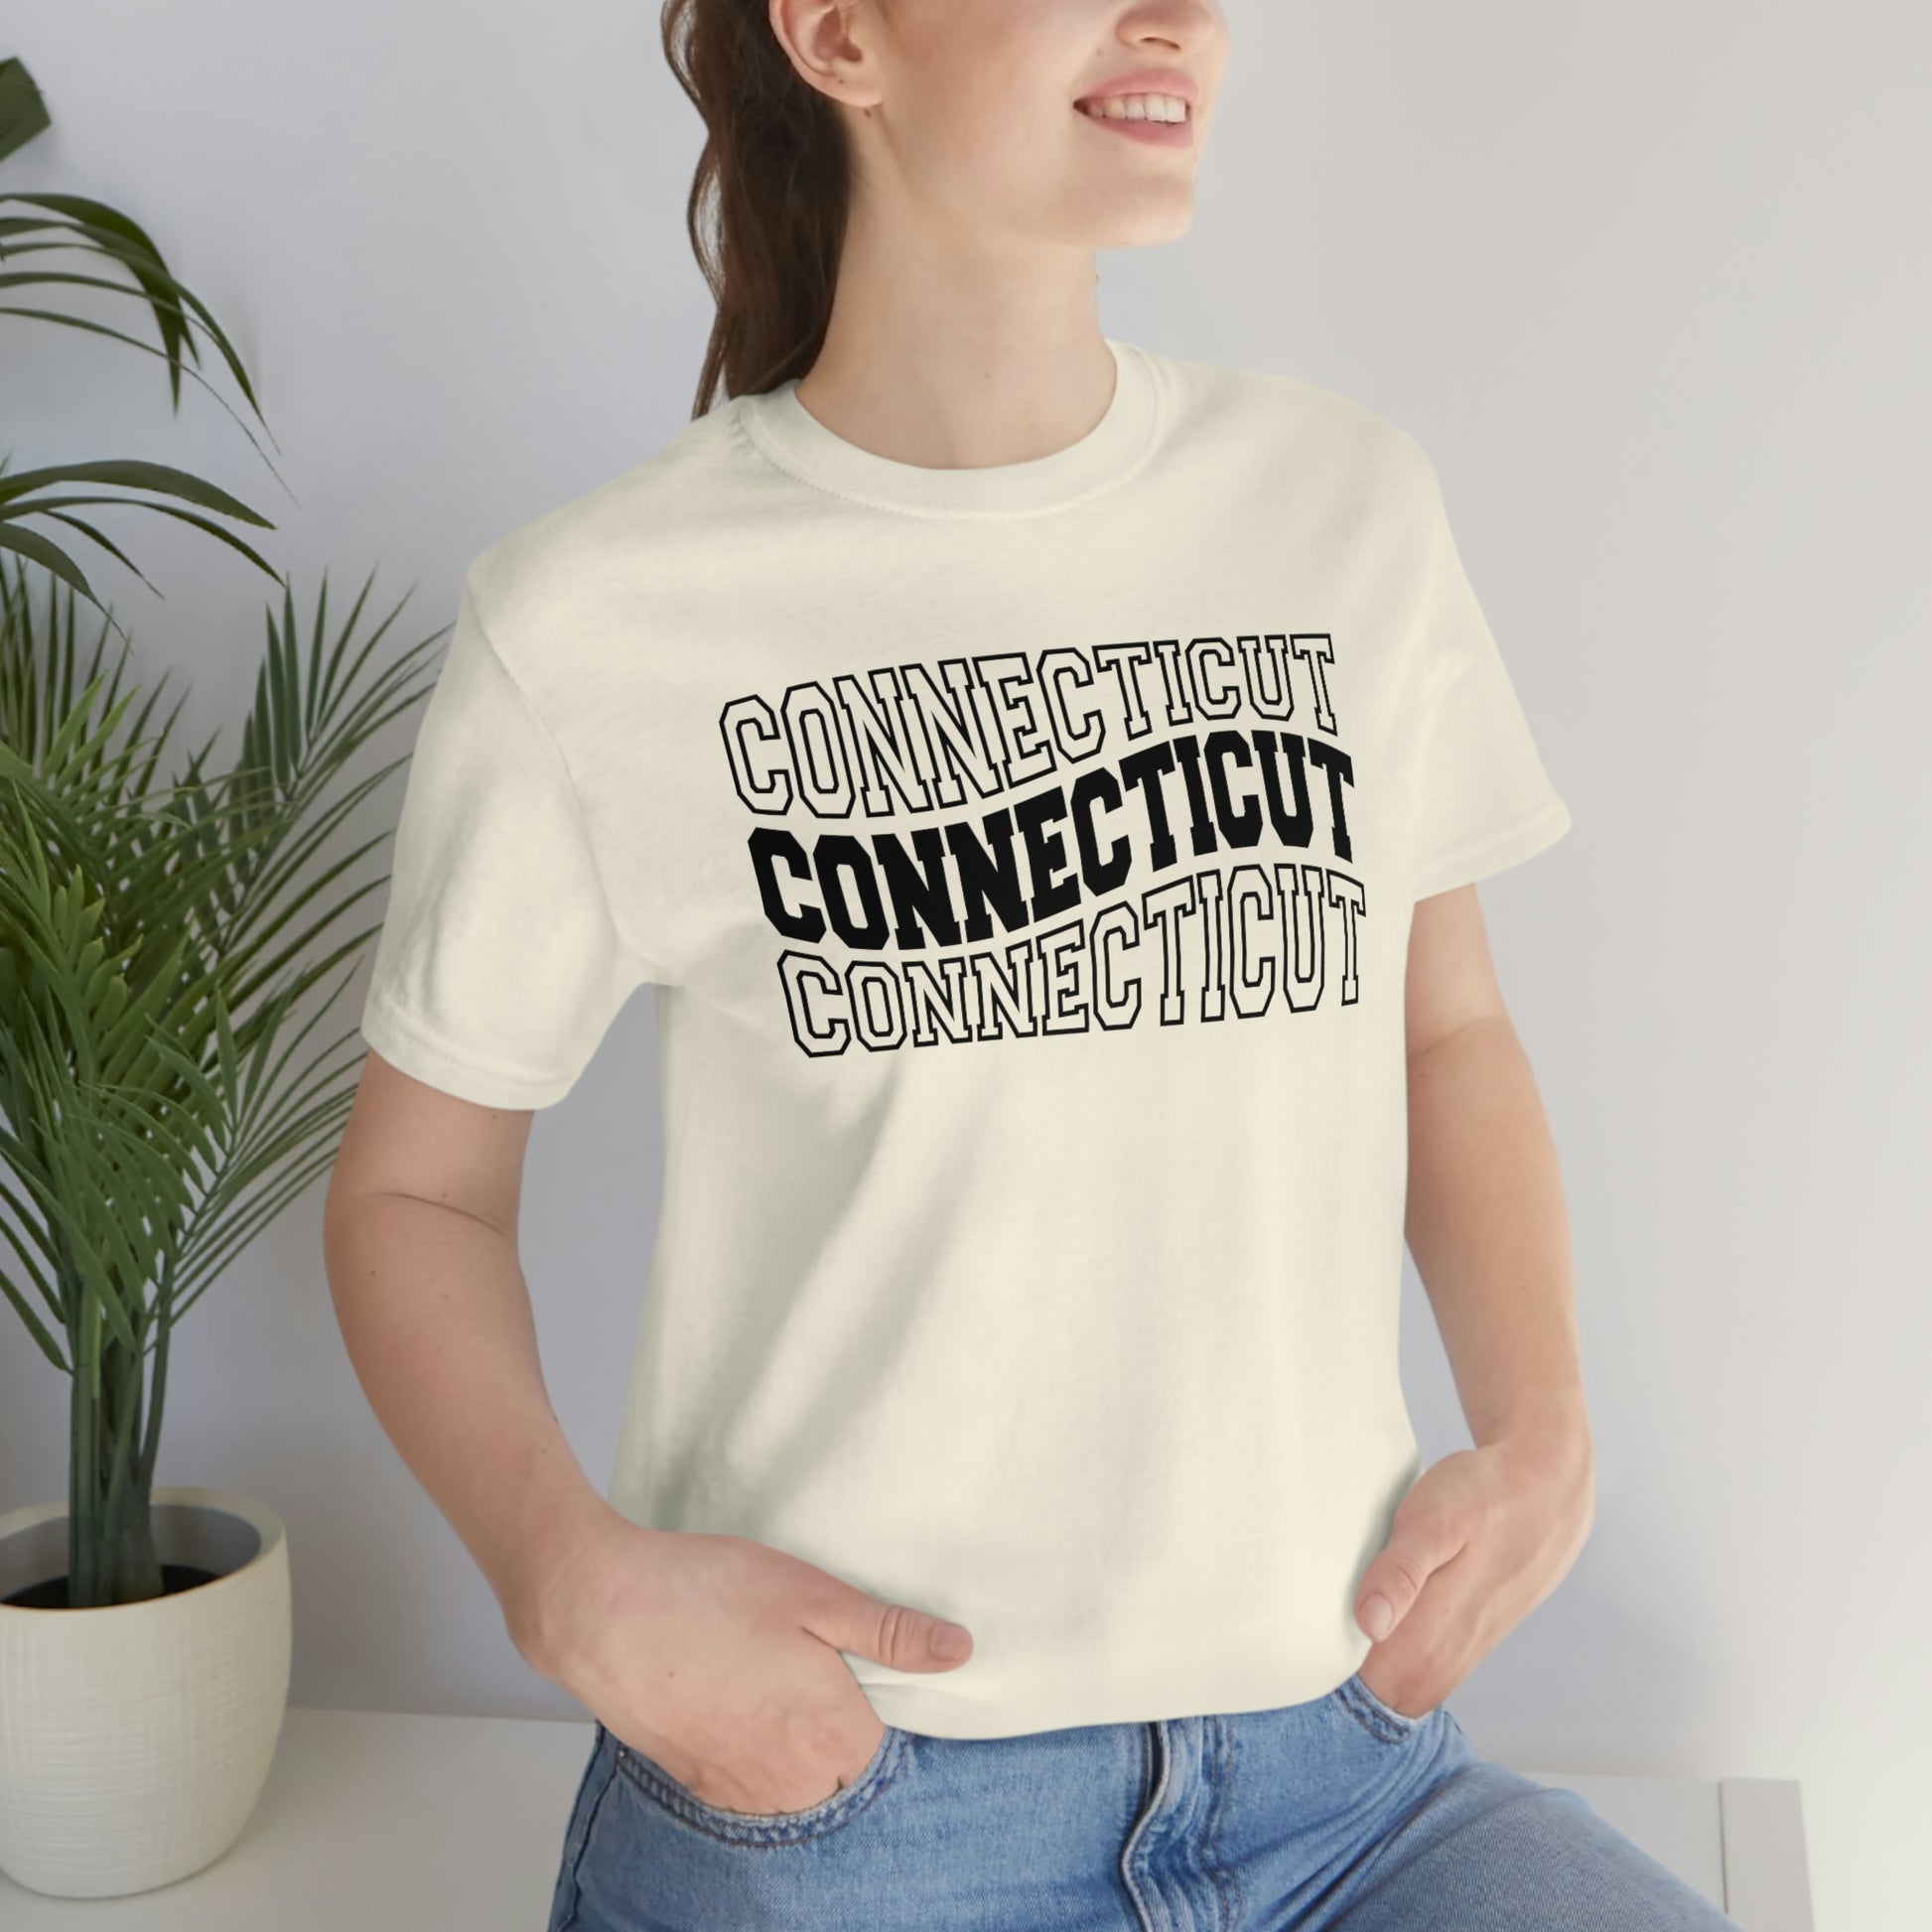 Connecticut Varsity Letters Wavy Short Sleeve  T-shirt